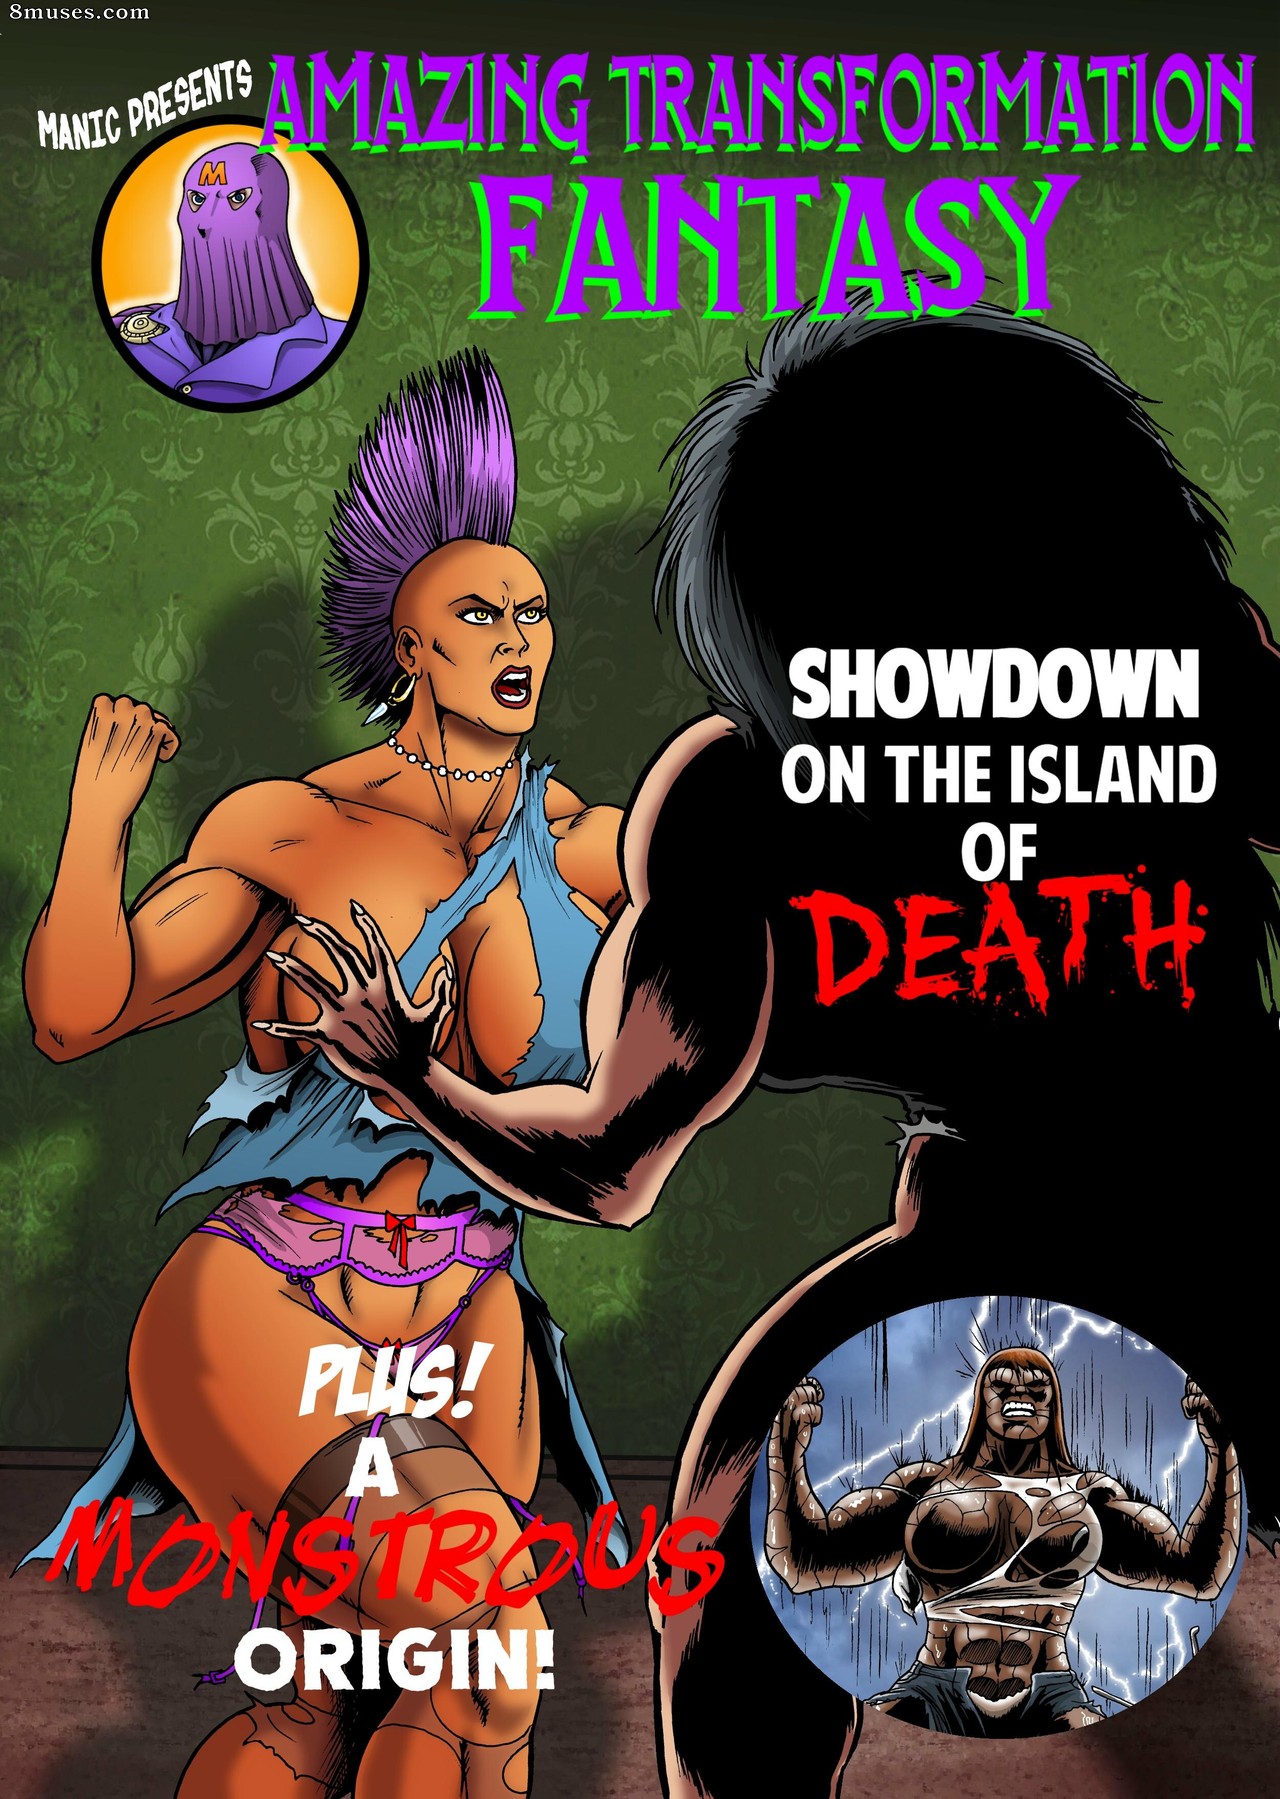 Amazing Fantasy - Transformation Fantasy Issue 1 - 8muses Comics - Sex Comics and Porn  Cartoons